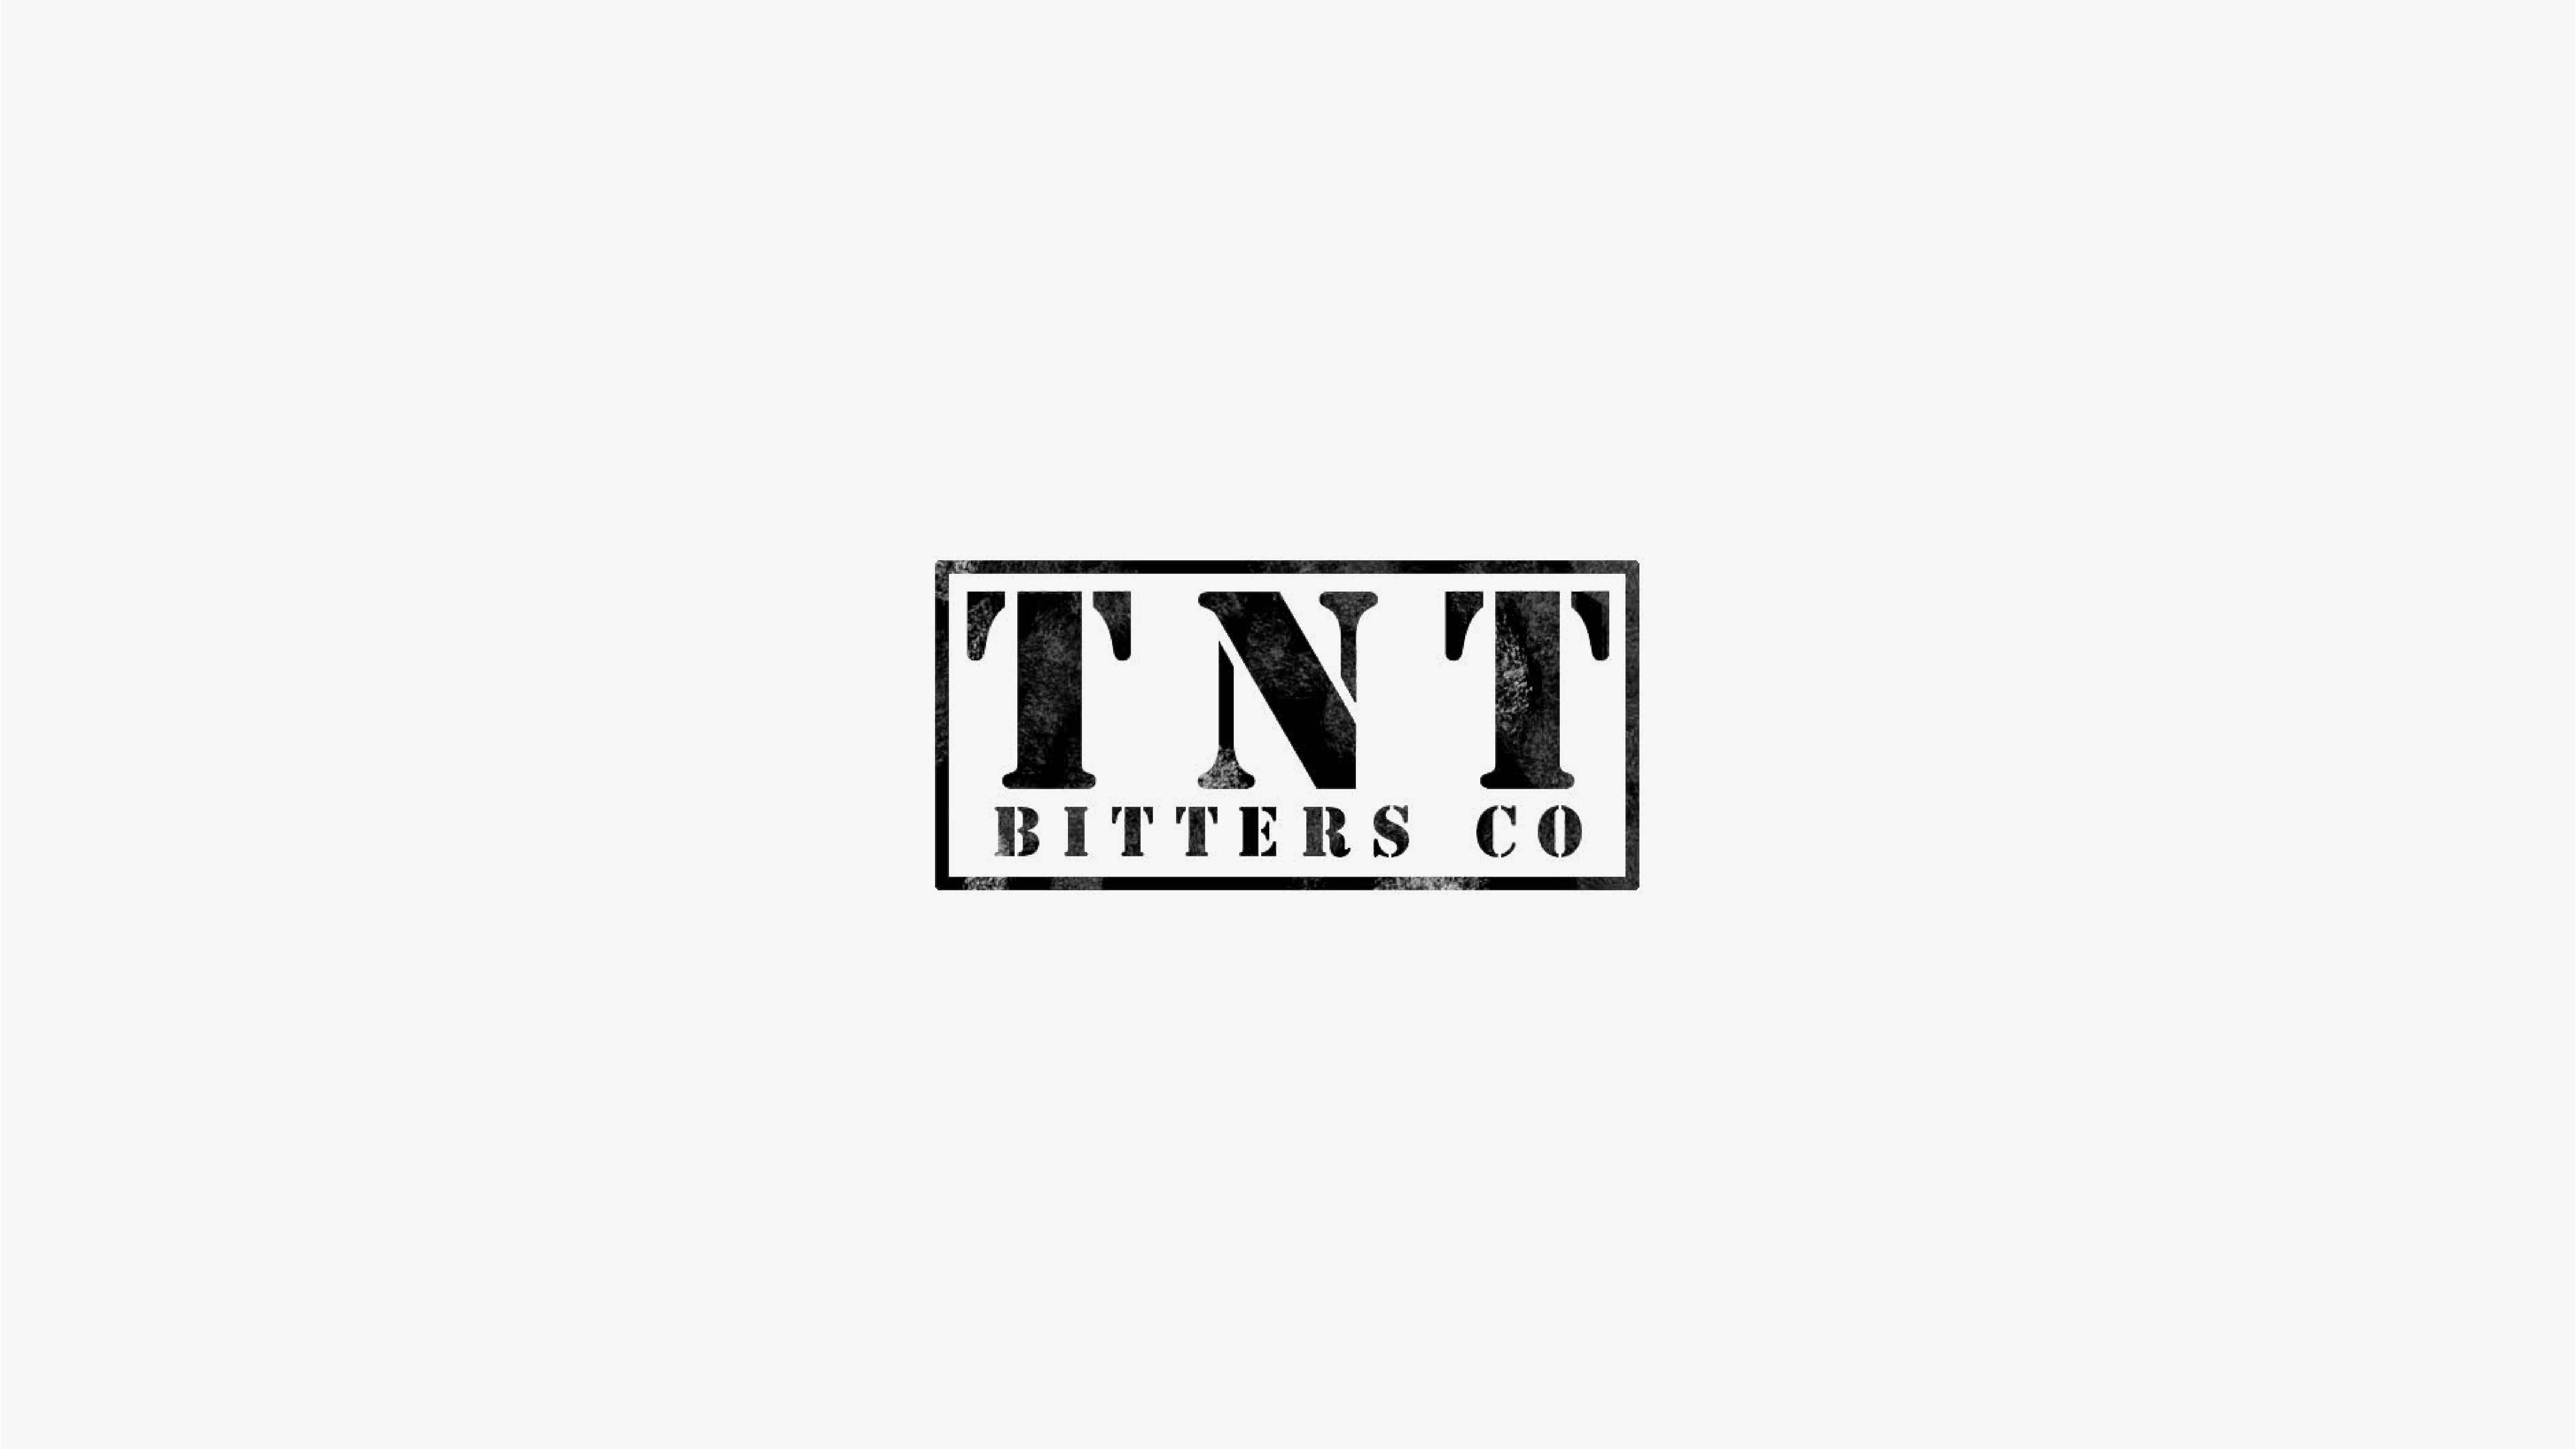 TNT - Logo Redesign